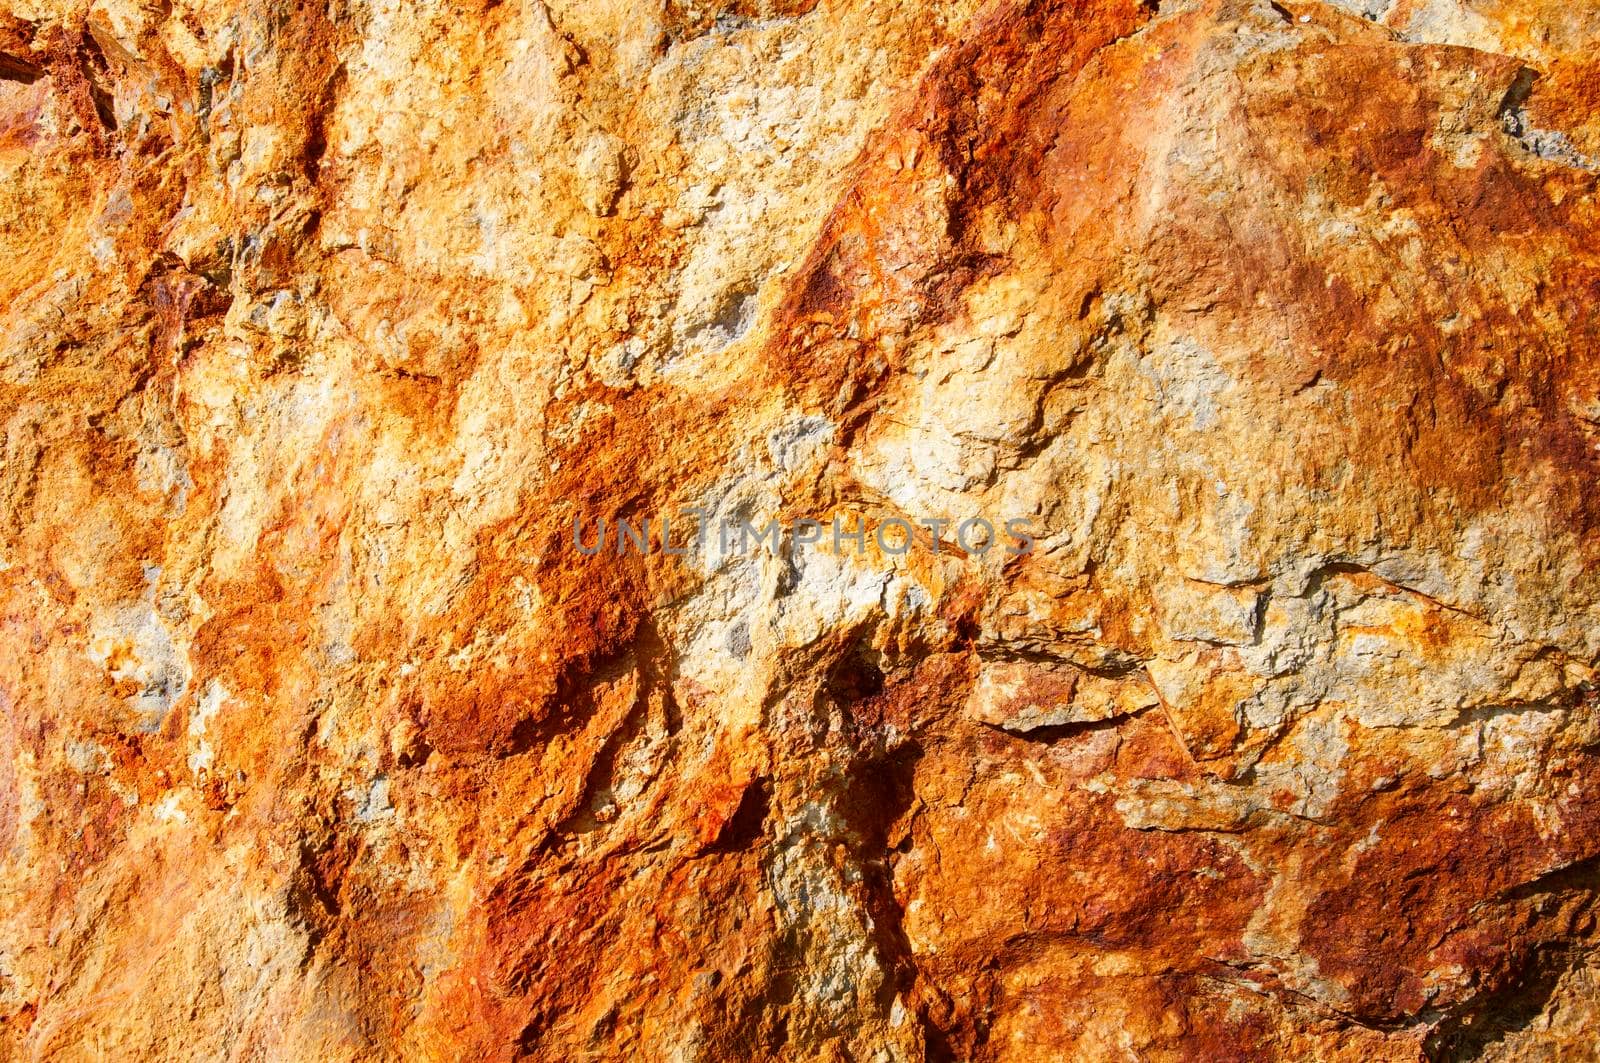 Rusty stone surface, close-up